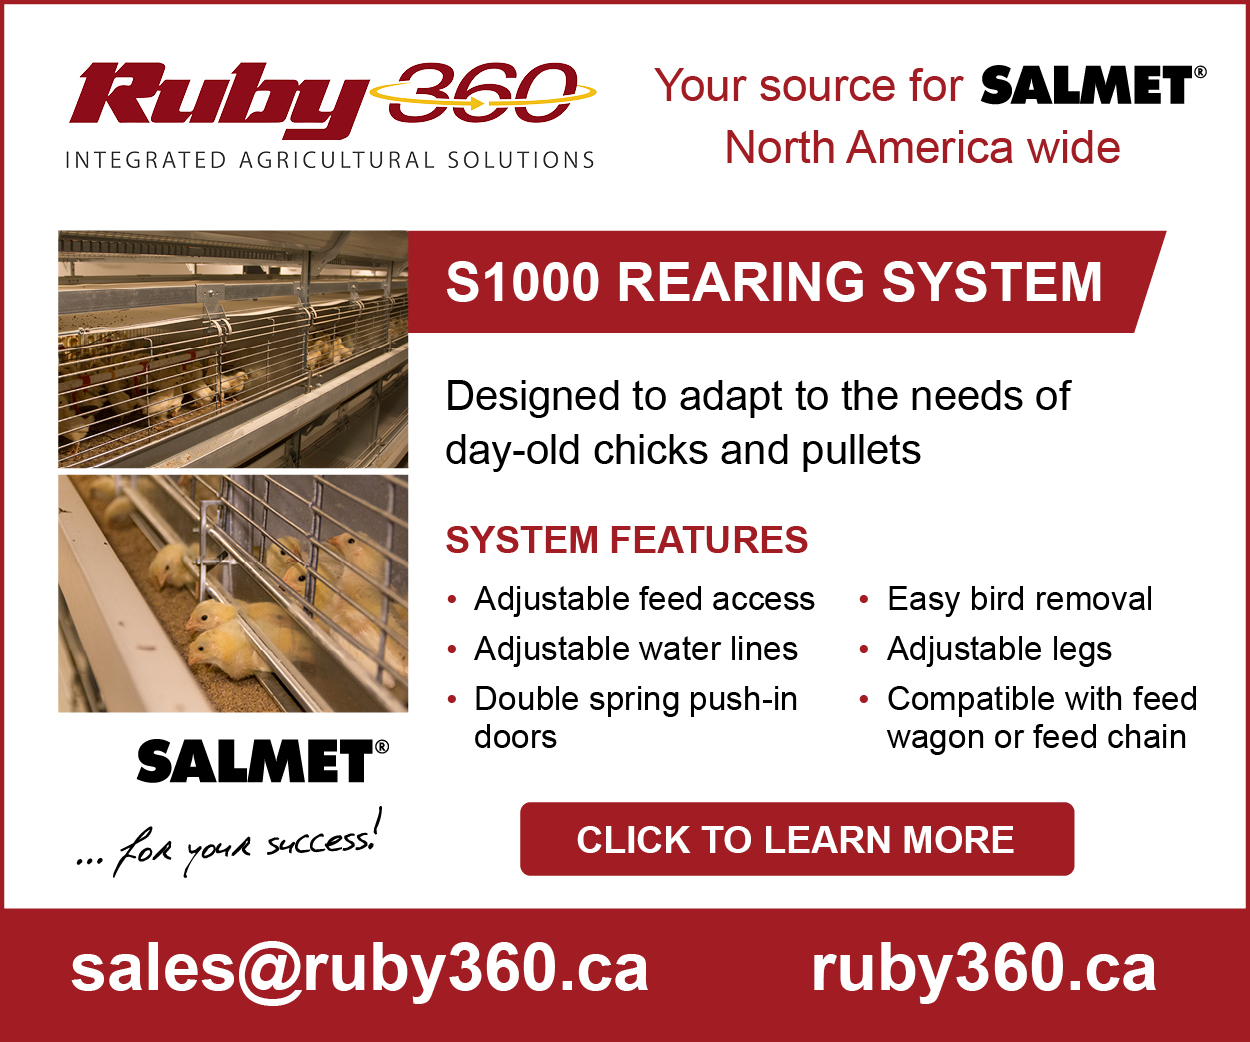 Ruby360 - Salmet’s S1000 rearing system